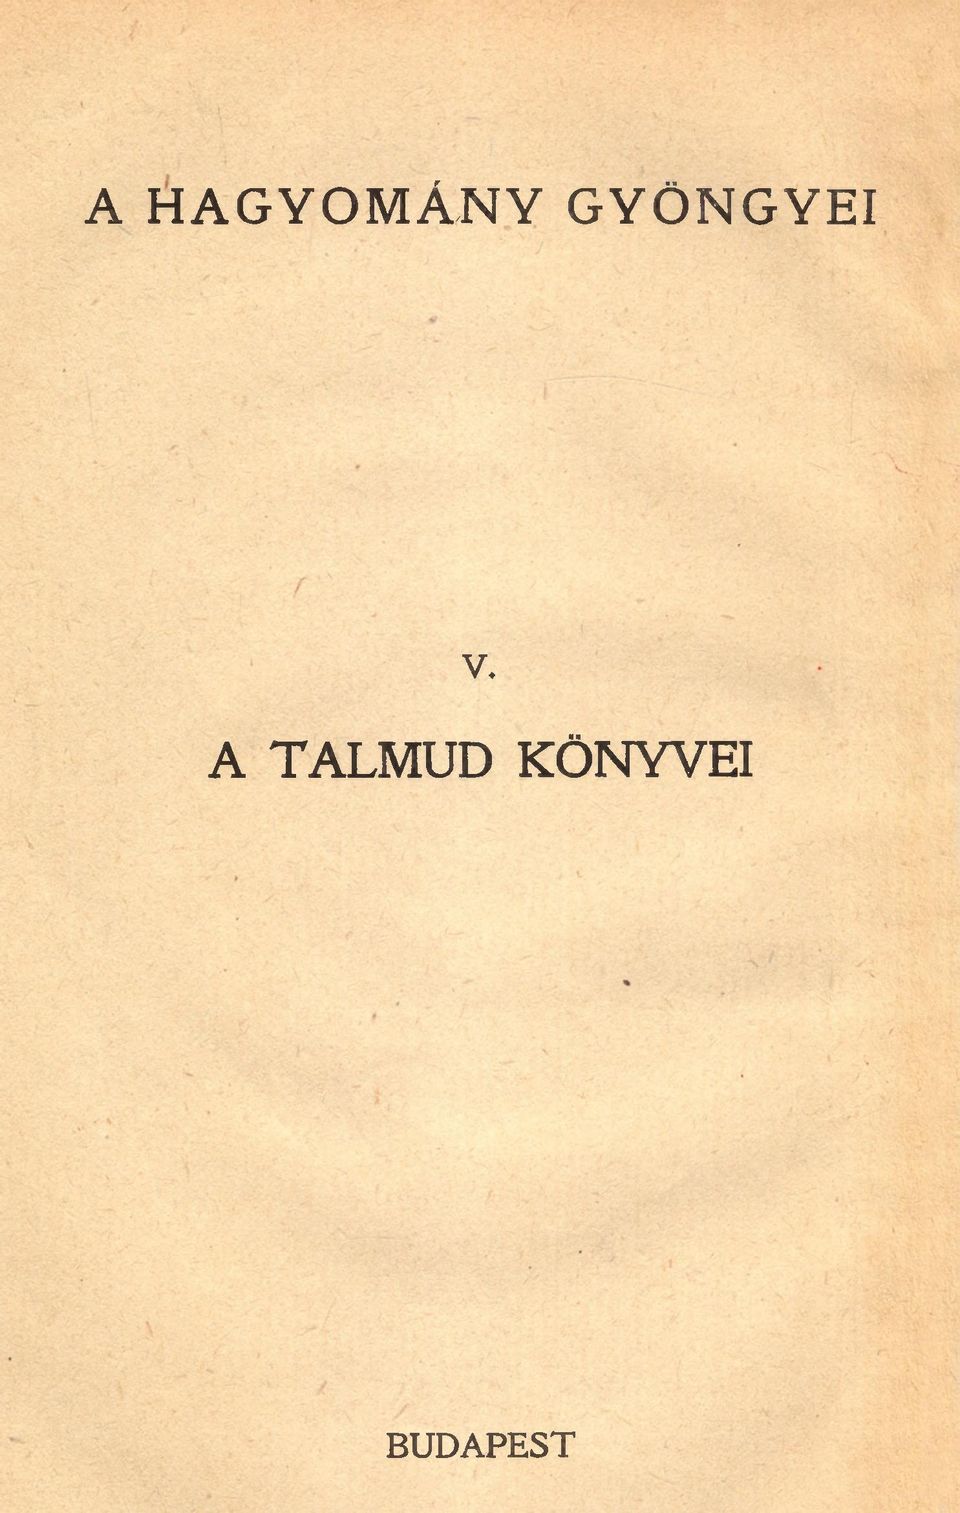 V. A TALMUD